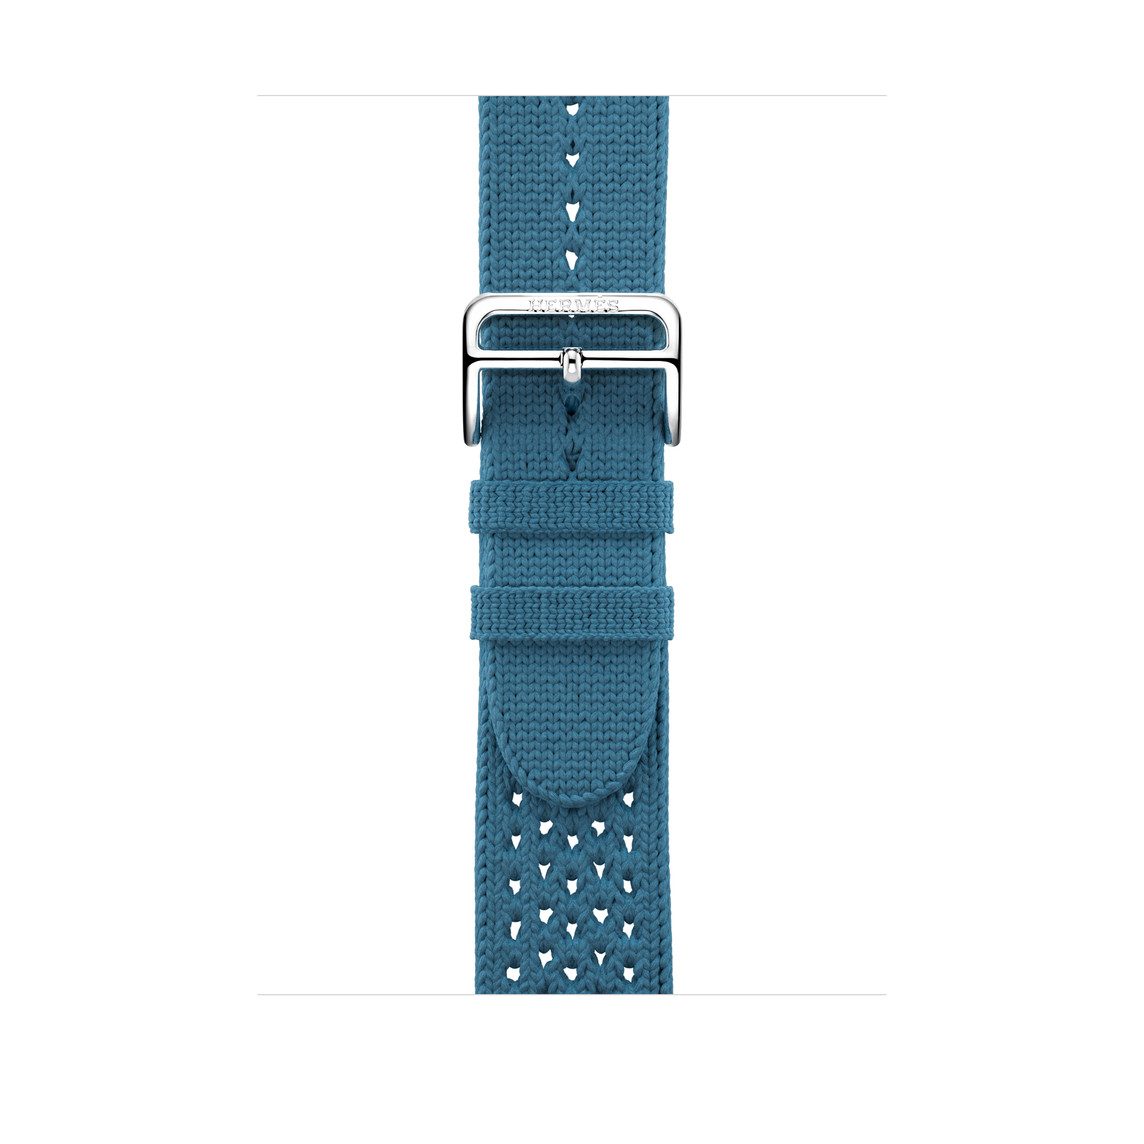 Tricot Single Tour Armband Bleu Jean (Blau), Textilgewebe mit silberner Schließe aus Edelstahl.